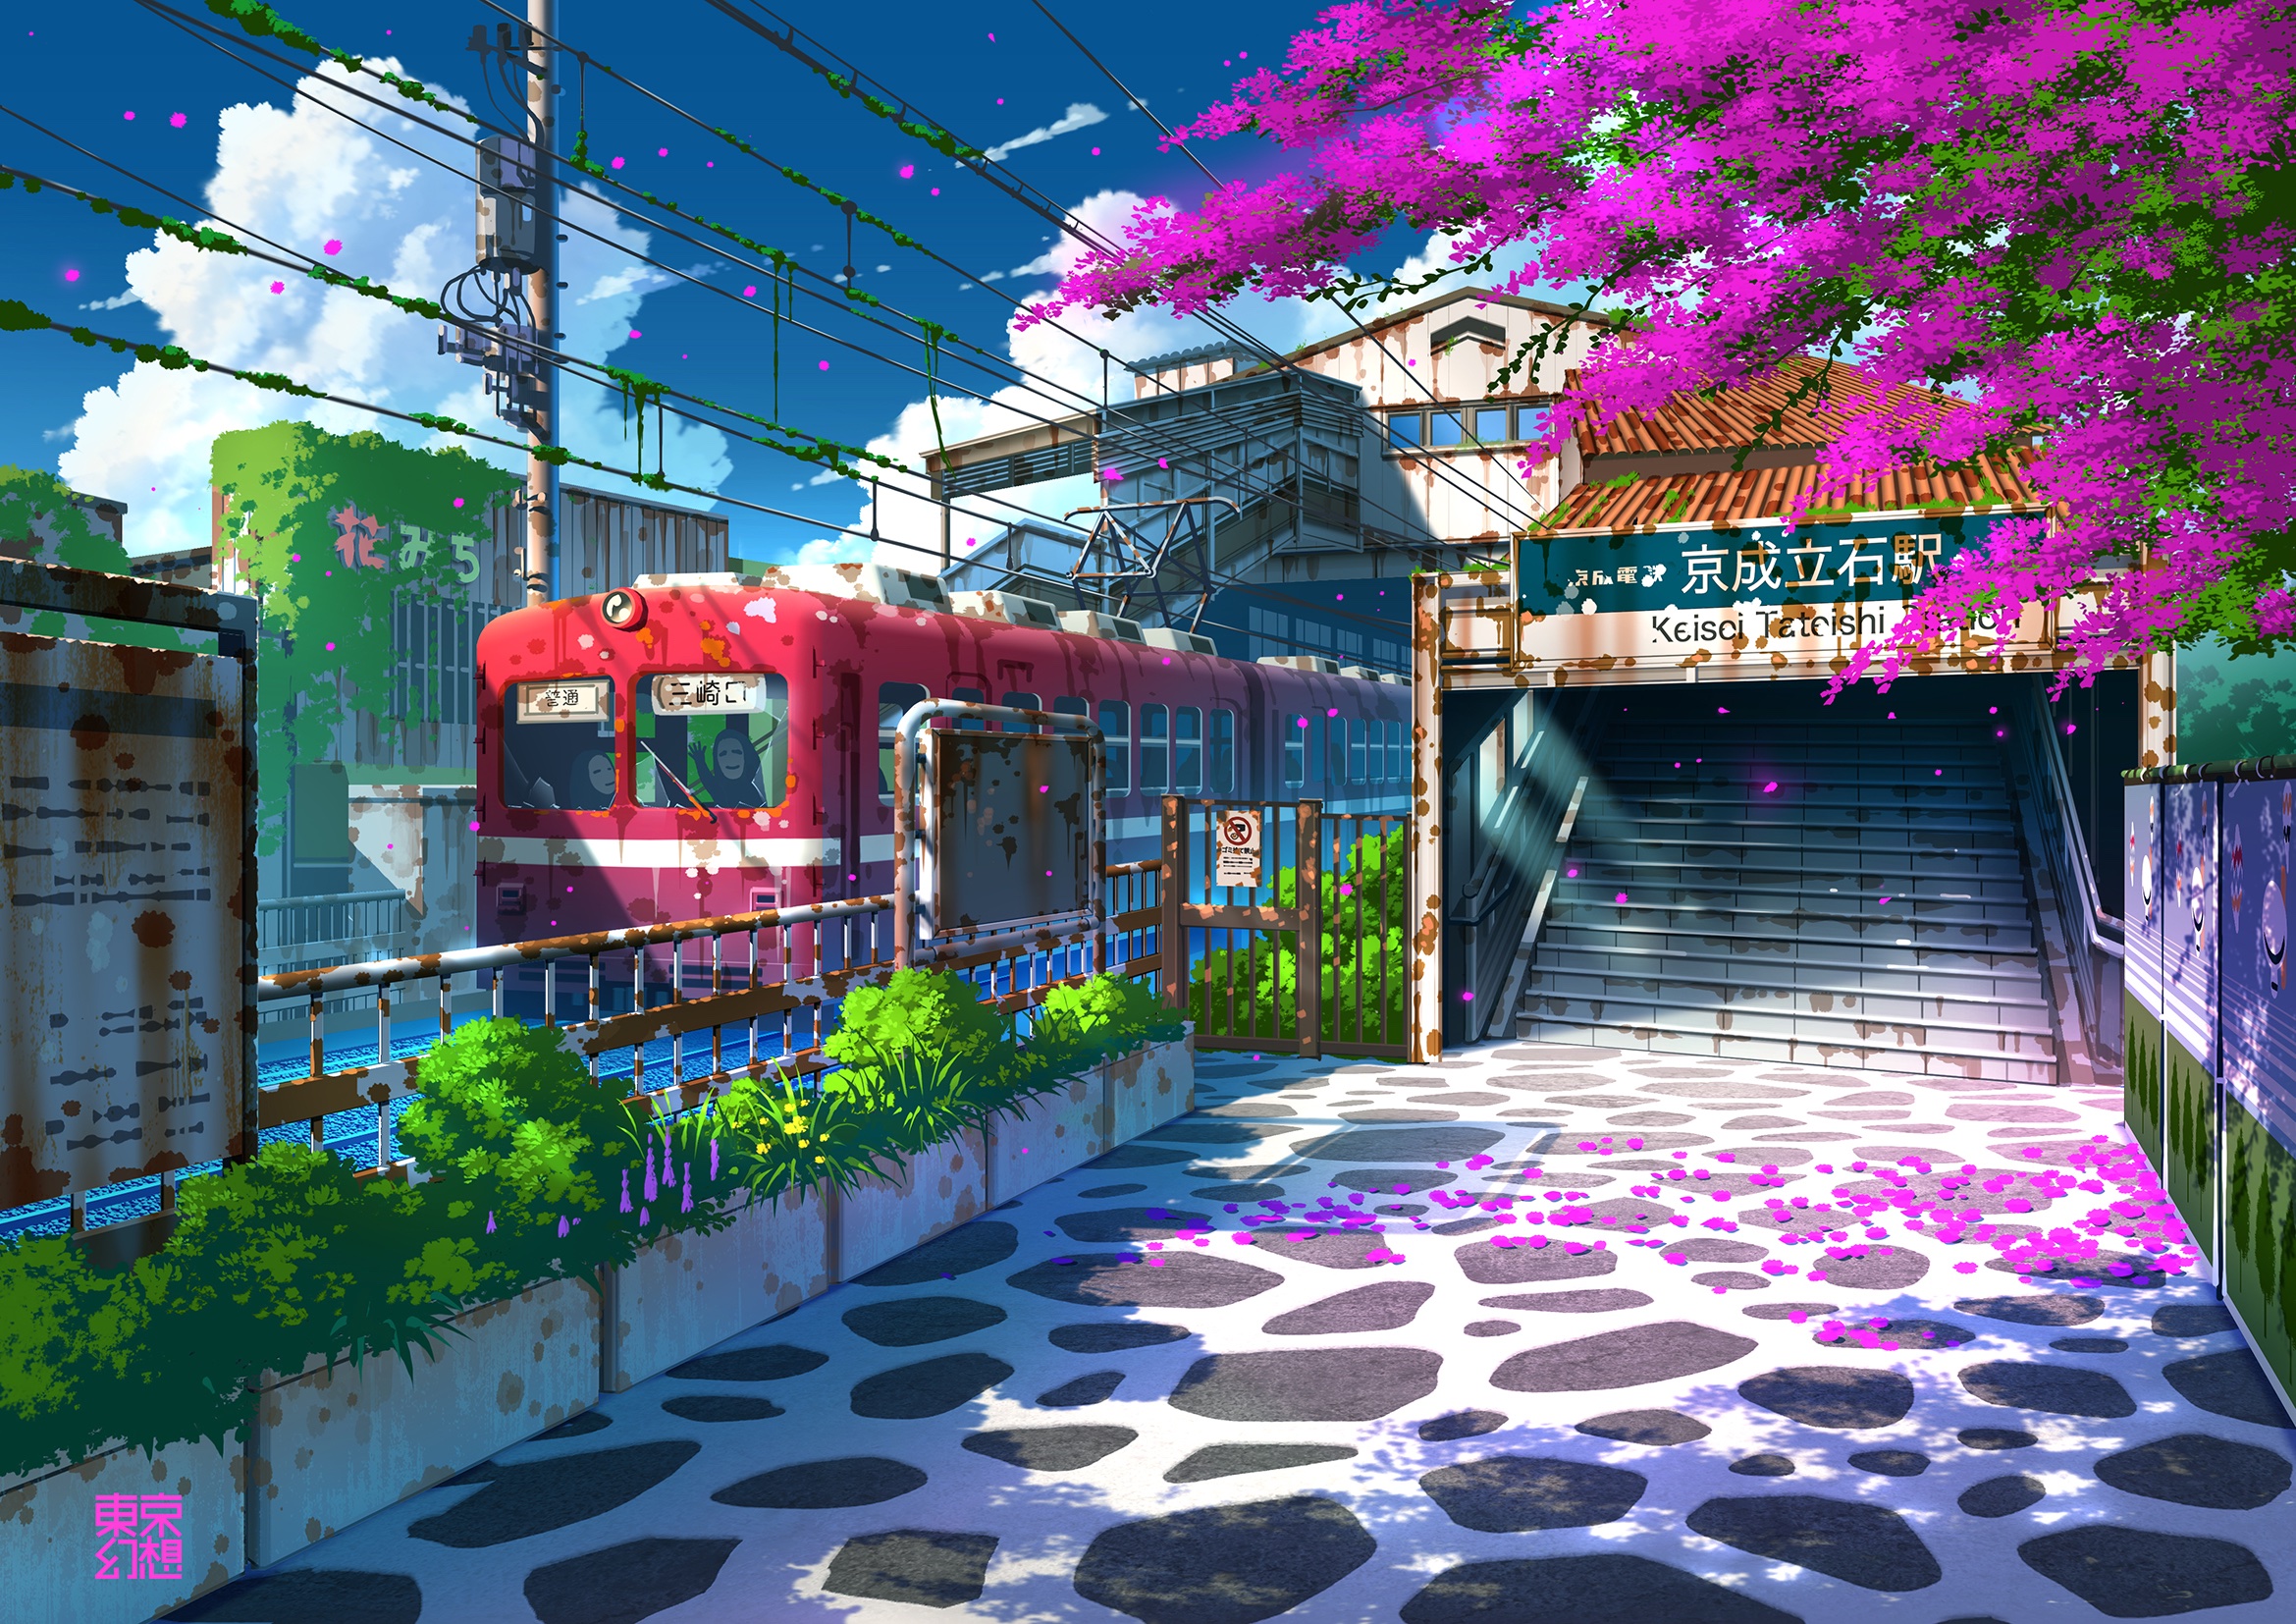 3840x2160] Anime Train Station | Train station, Anime background, Anime  scenery